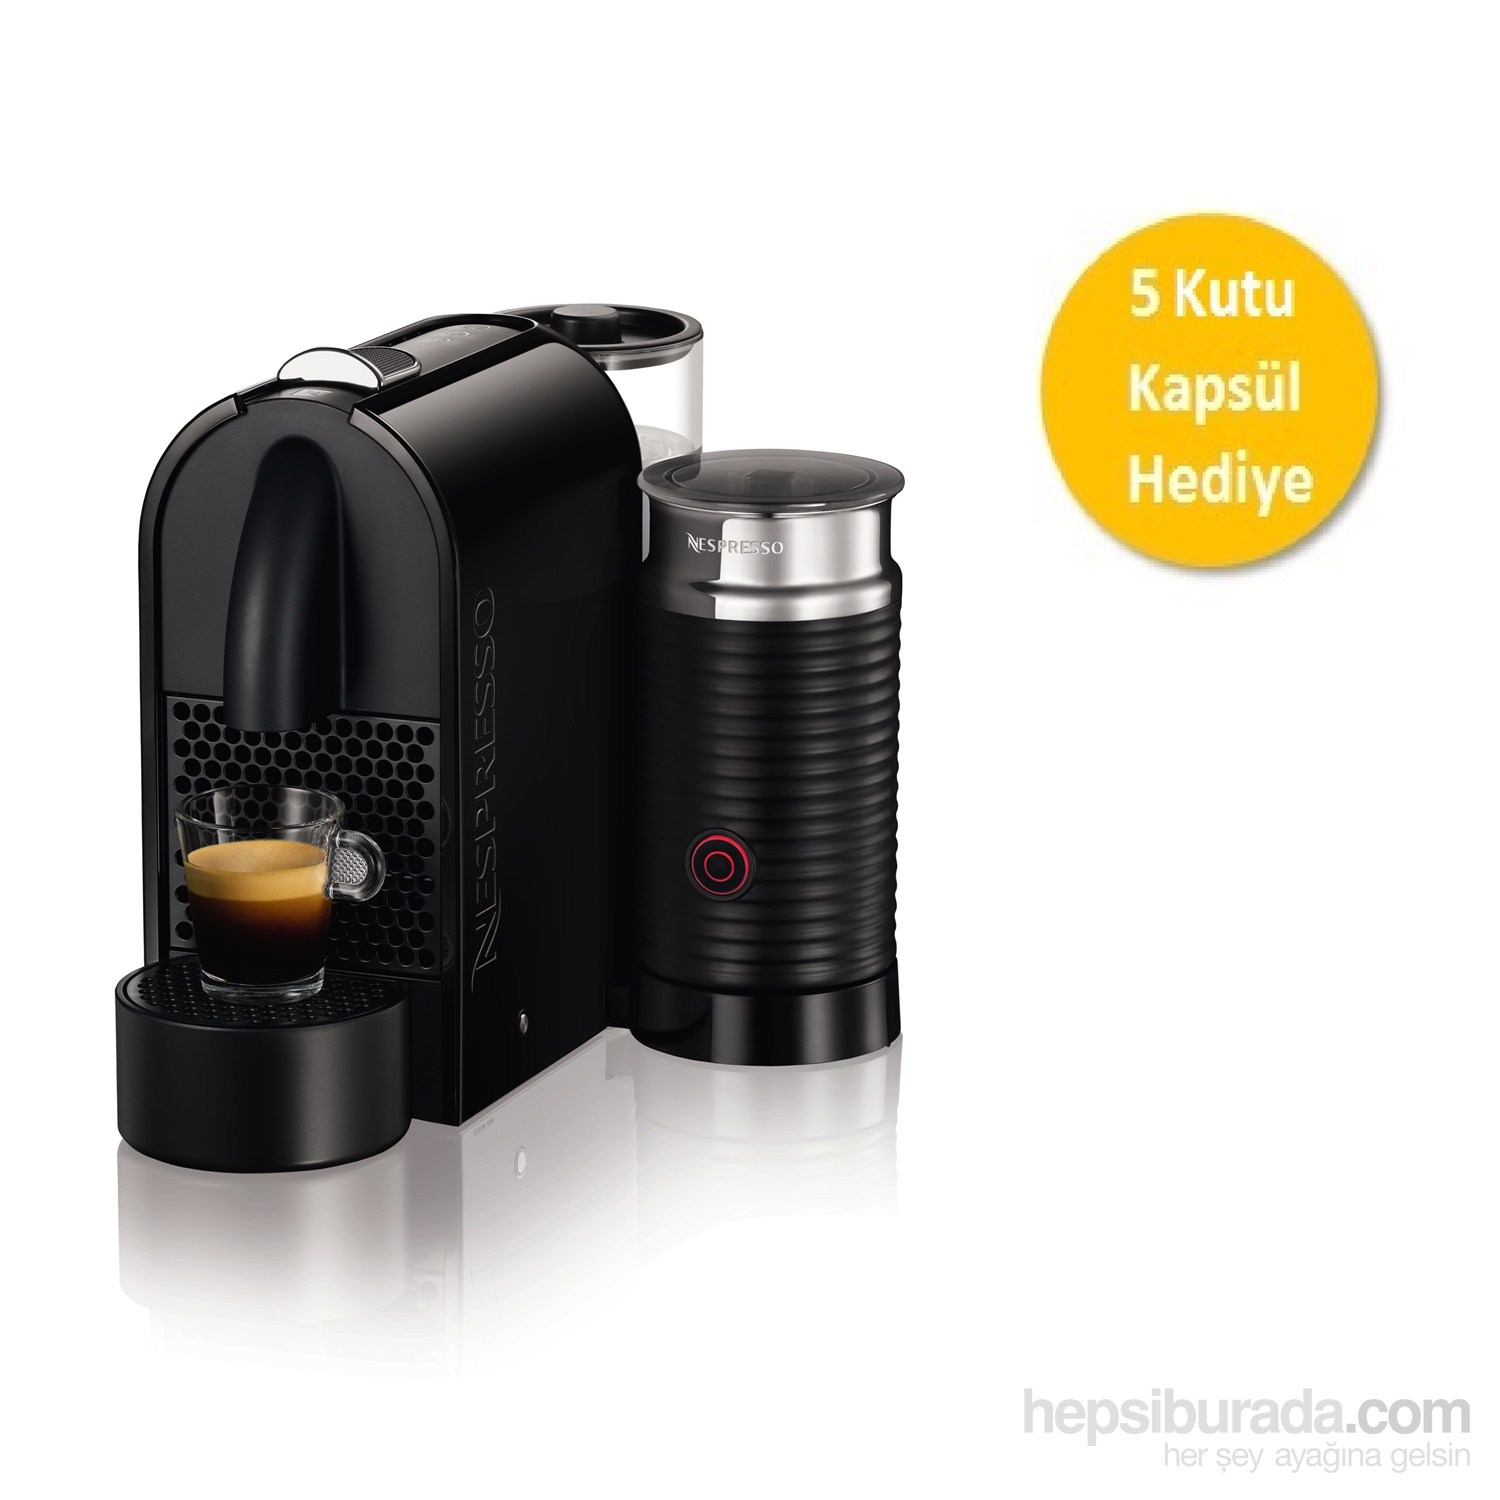 Nespresso U D55 Kahve Makinesi - Siyah Renkli + Aeroccino 3 Süt Köpürtücü